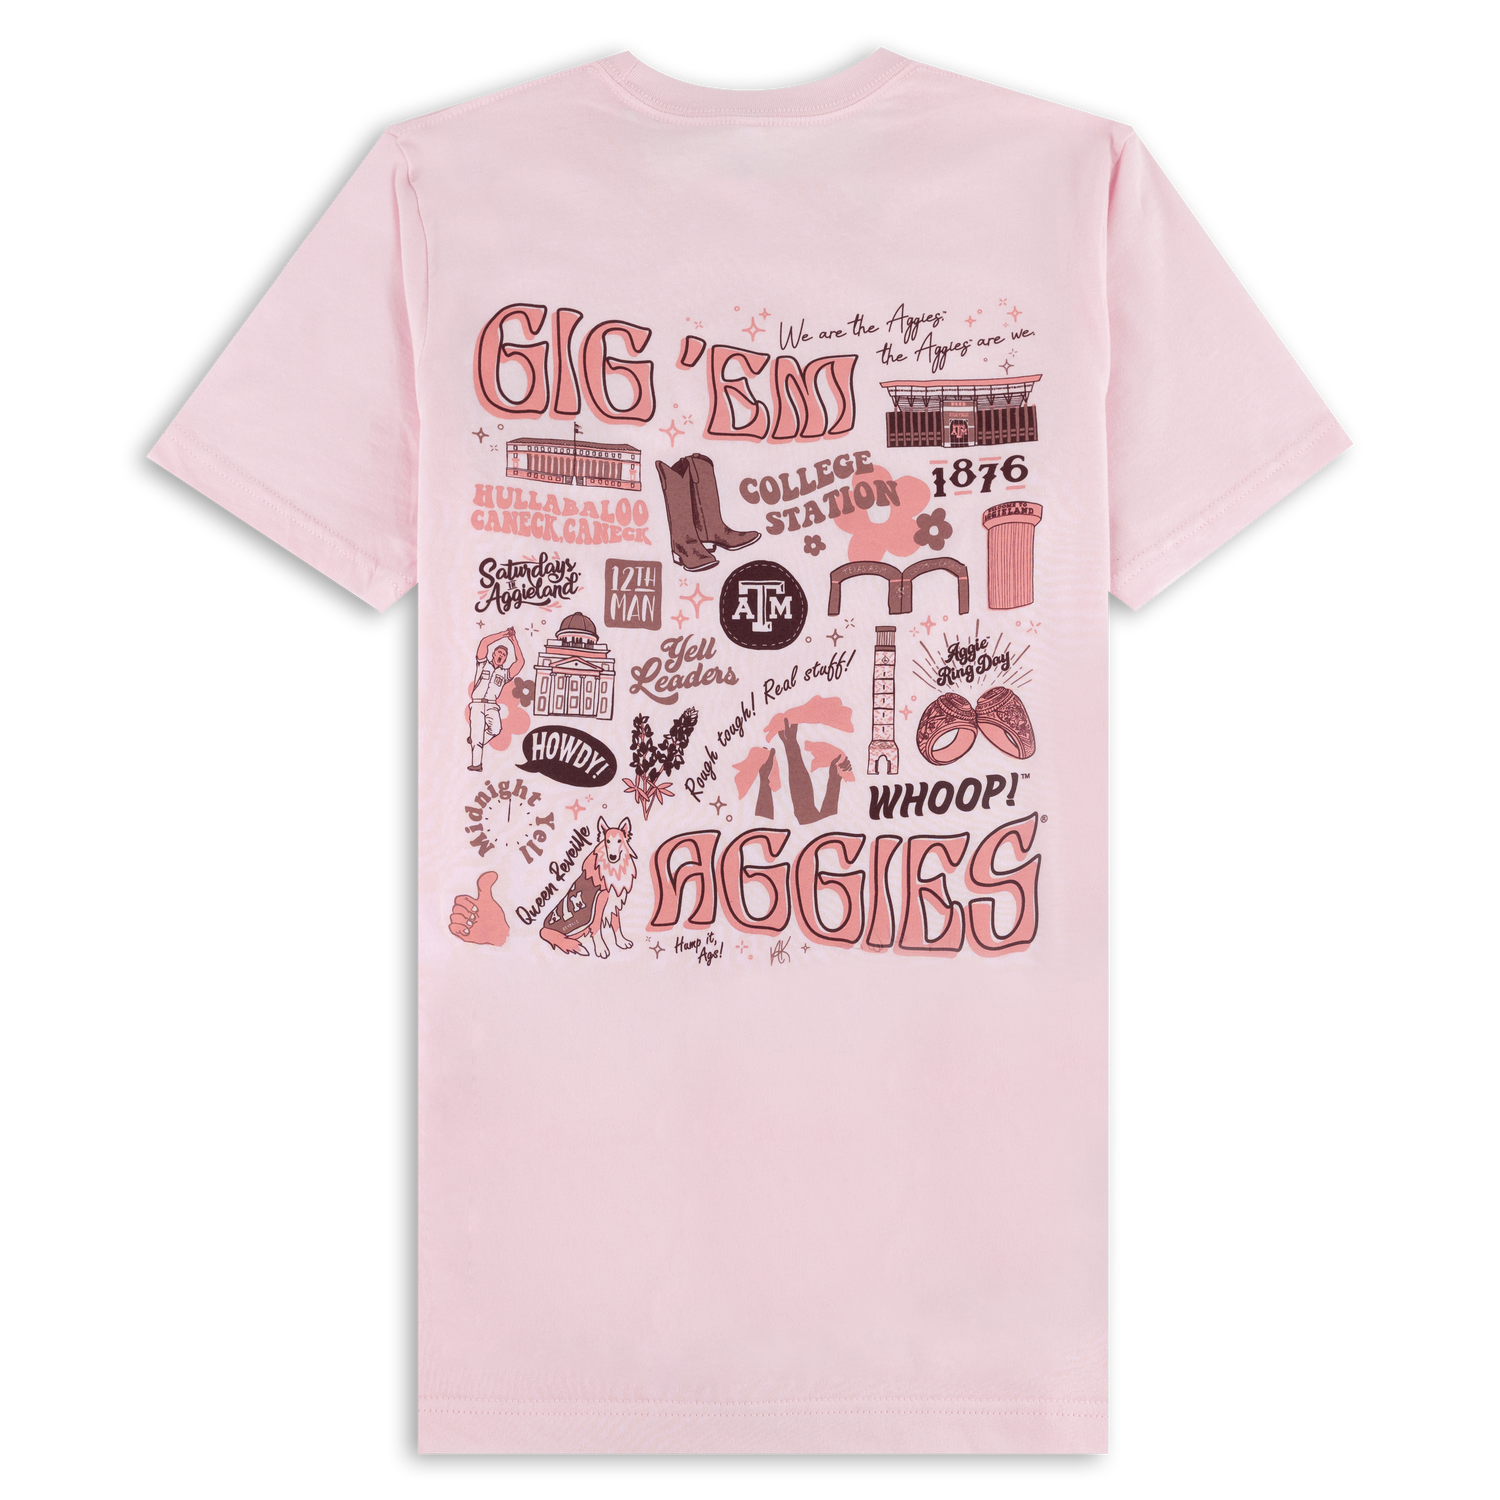 Texas A&M Gig 'Em Aggies Collage T-Shirt